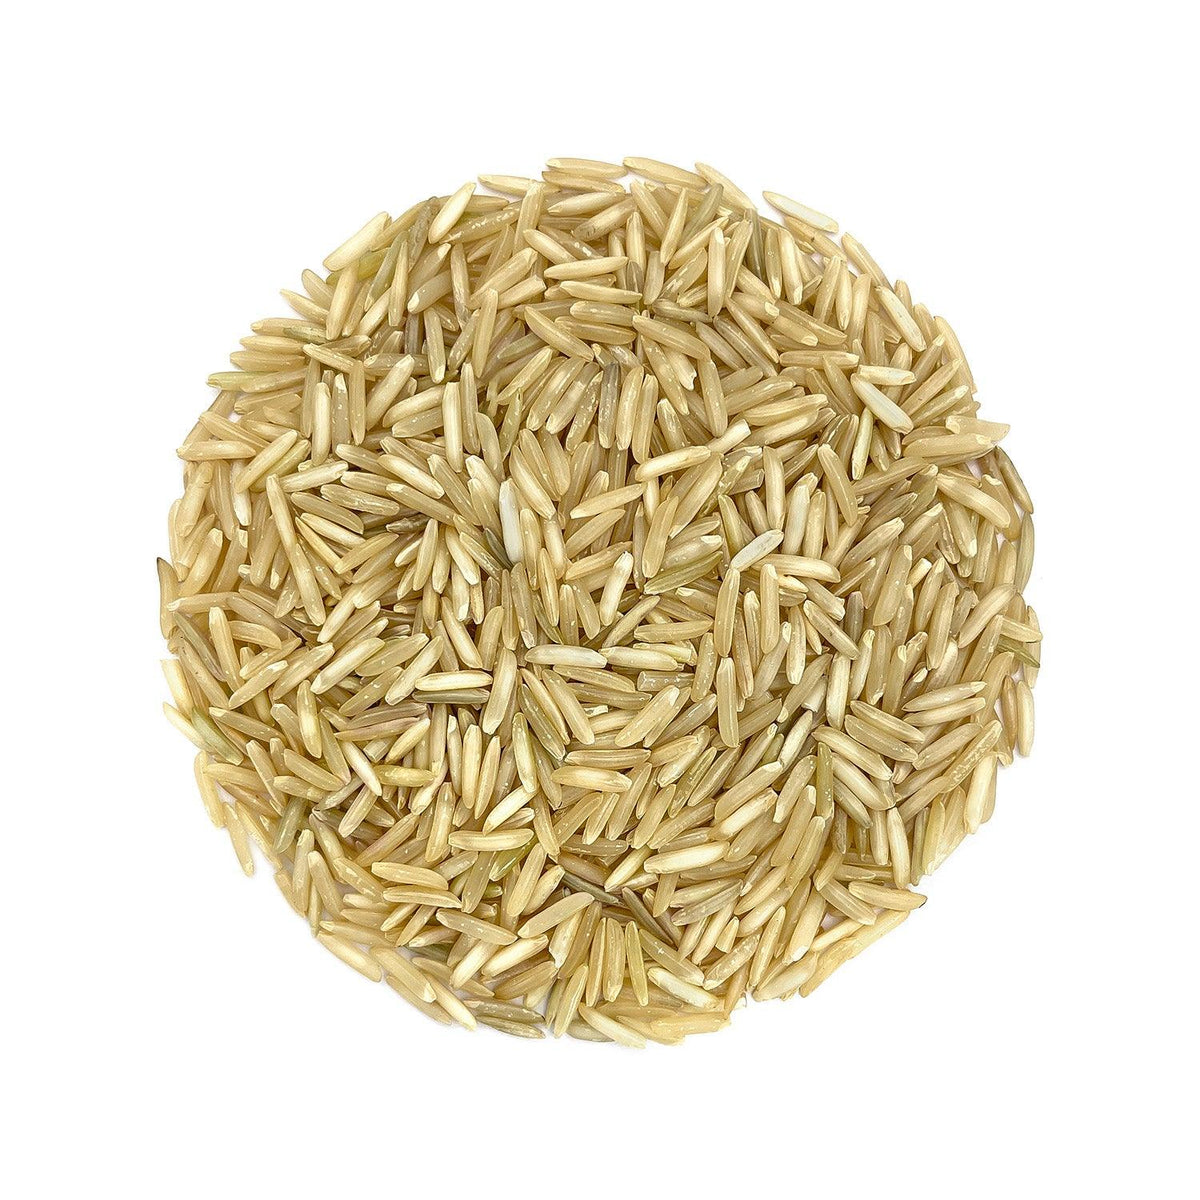 Brown Rice Basmati 800g/ 4.8kg - Organic, Purely Natural & Unpolished | Long Grain Rice perfect for preparing Biryani & Vegetable Pulao - Satopradhan